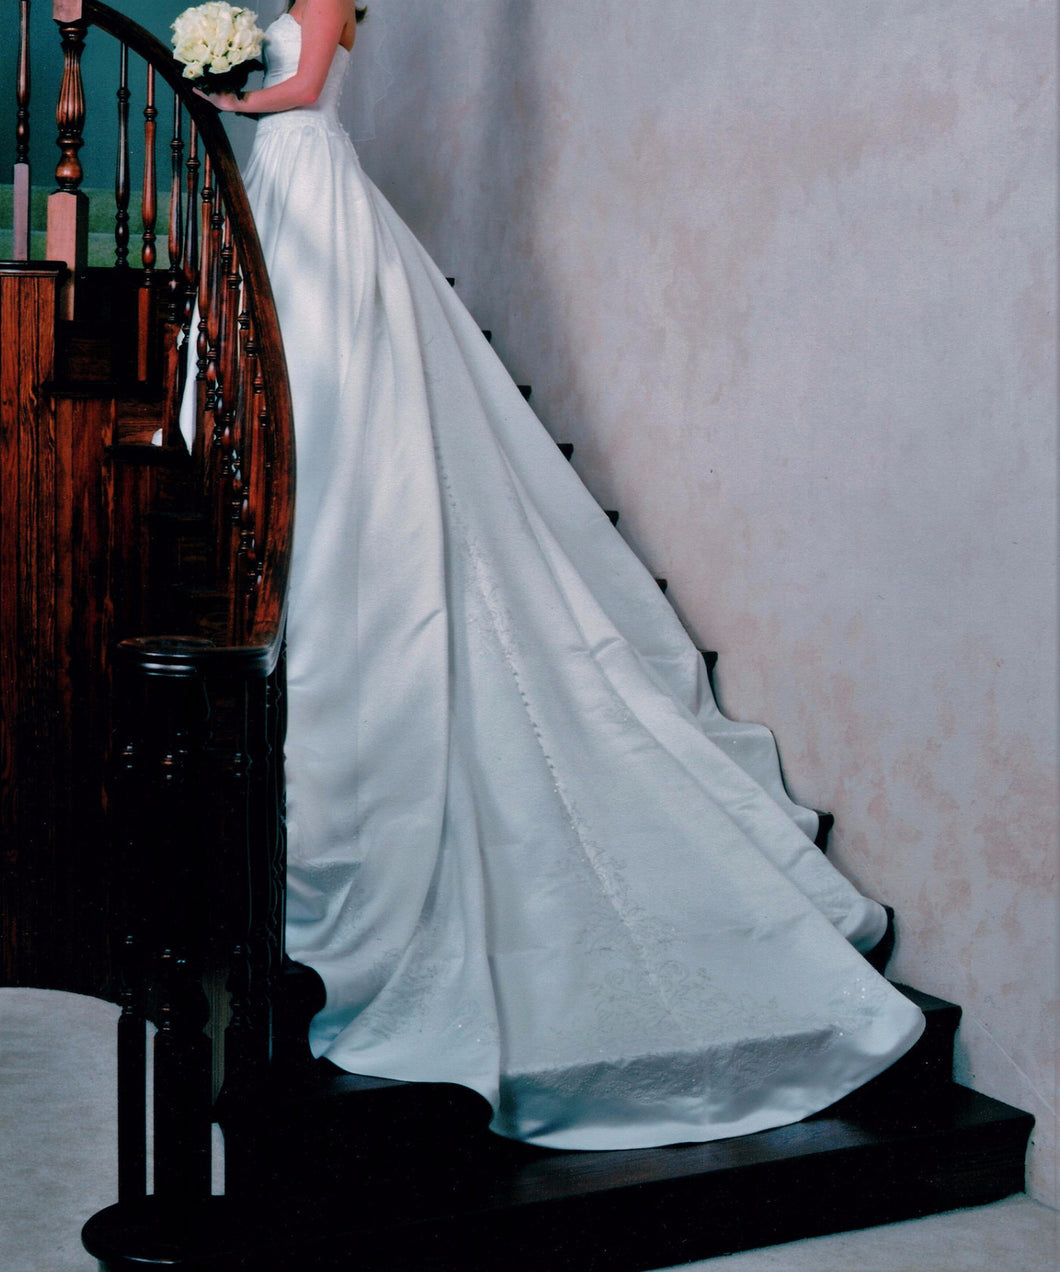 Audrey Hart 'Italian Satin' size 6 used wedding dress side view on bride